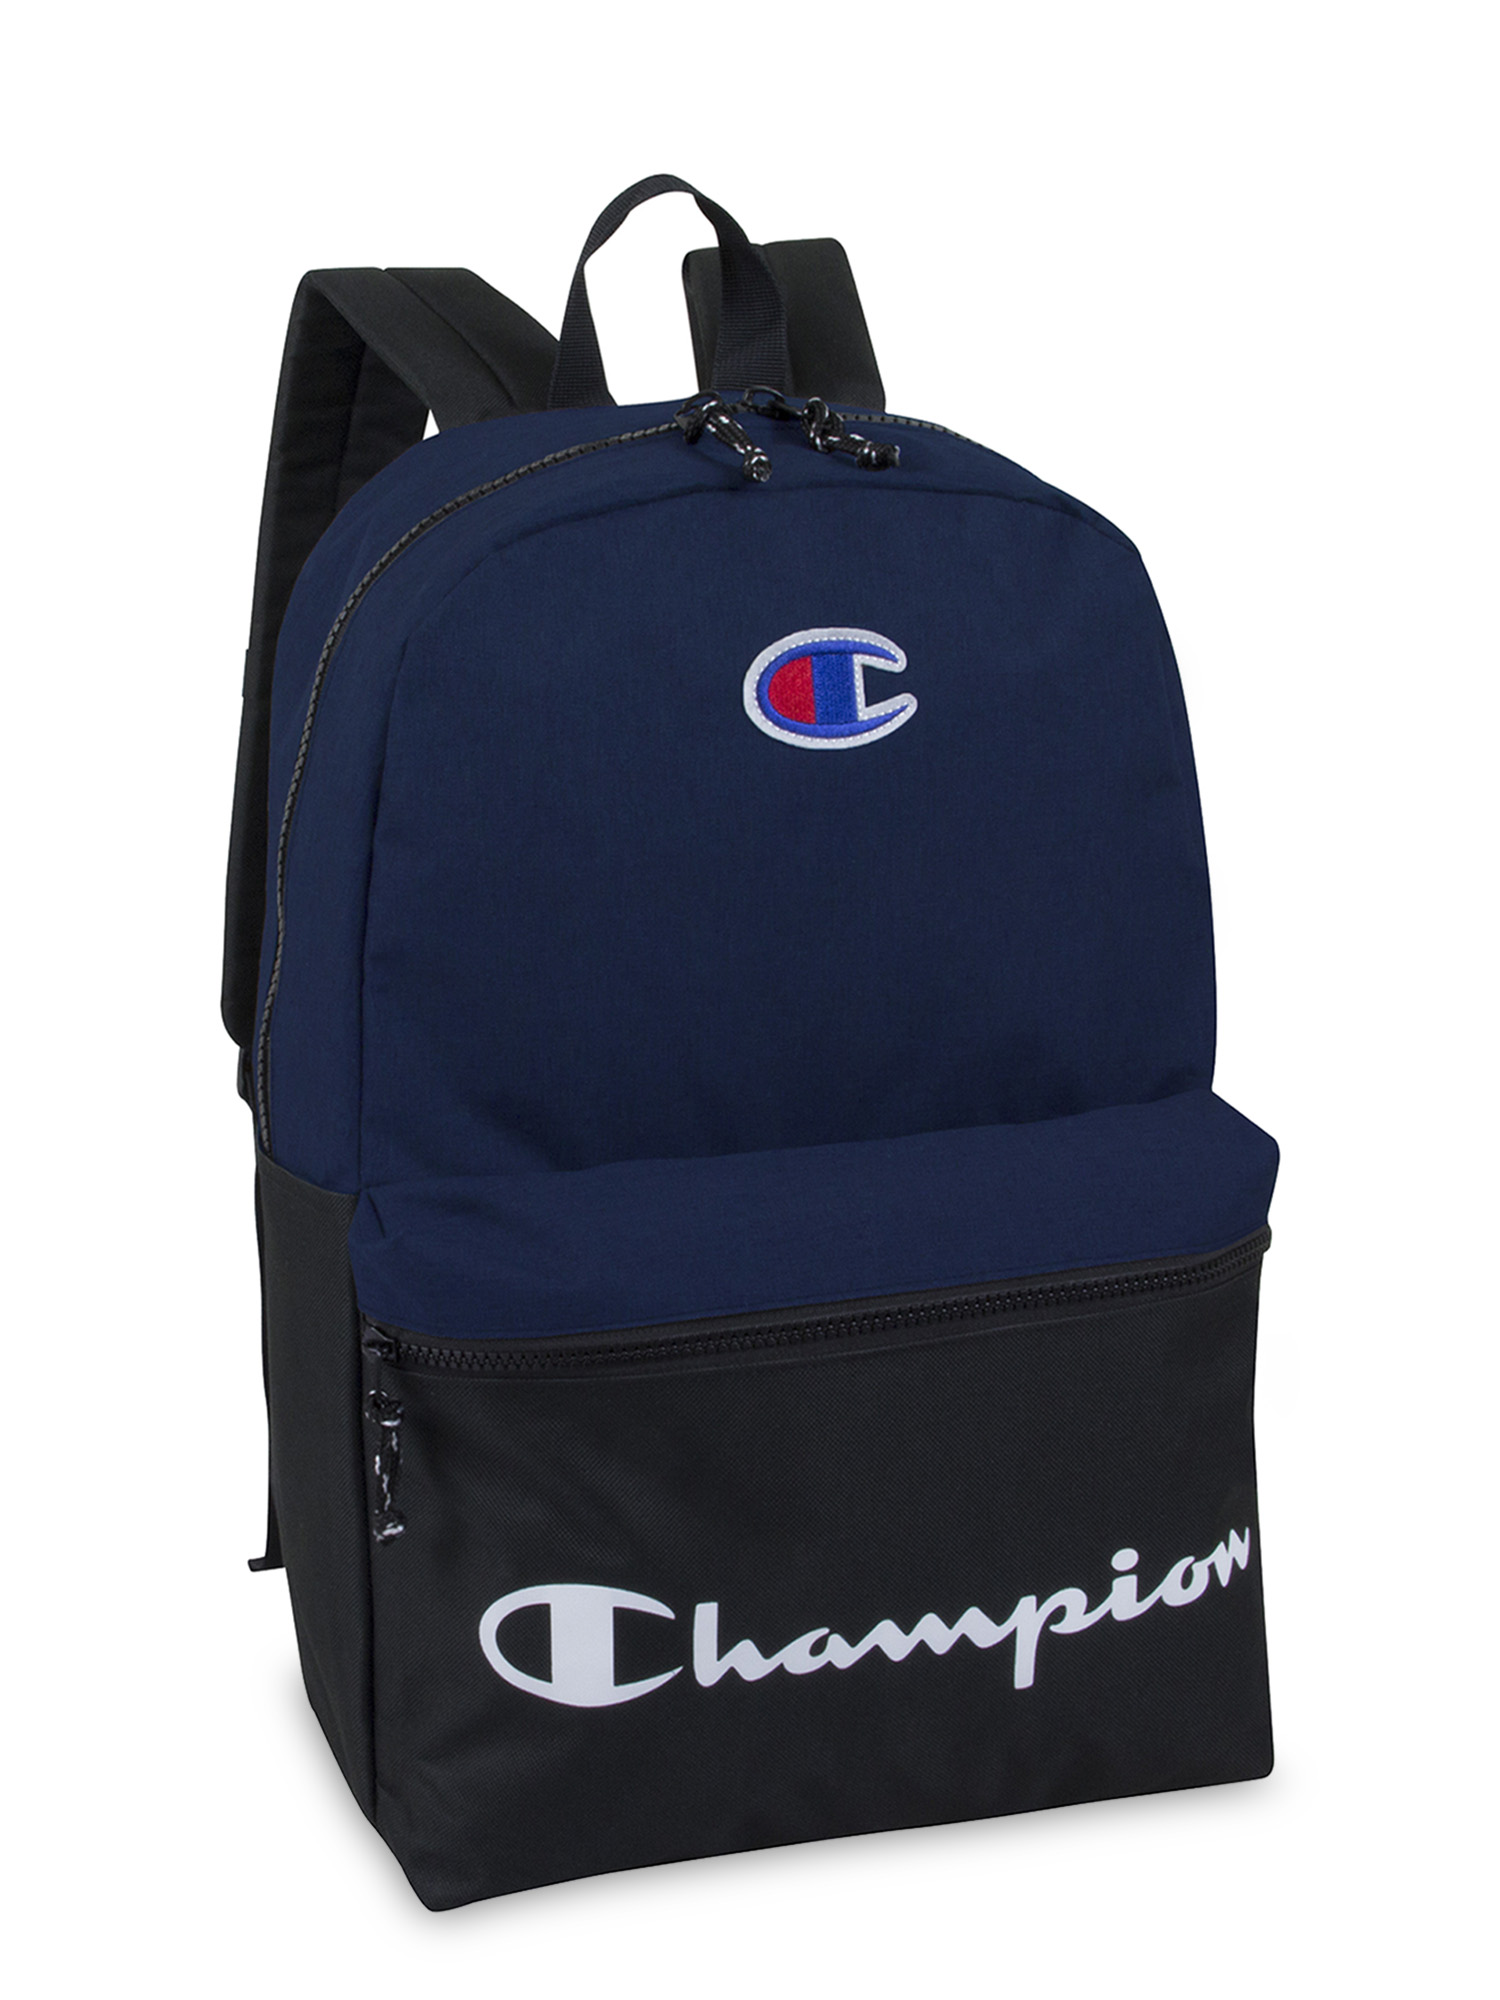 Champion Unisex Adult Manuscript Backpack Blue - image 1 of 5